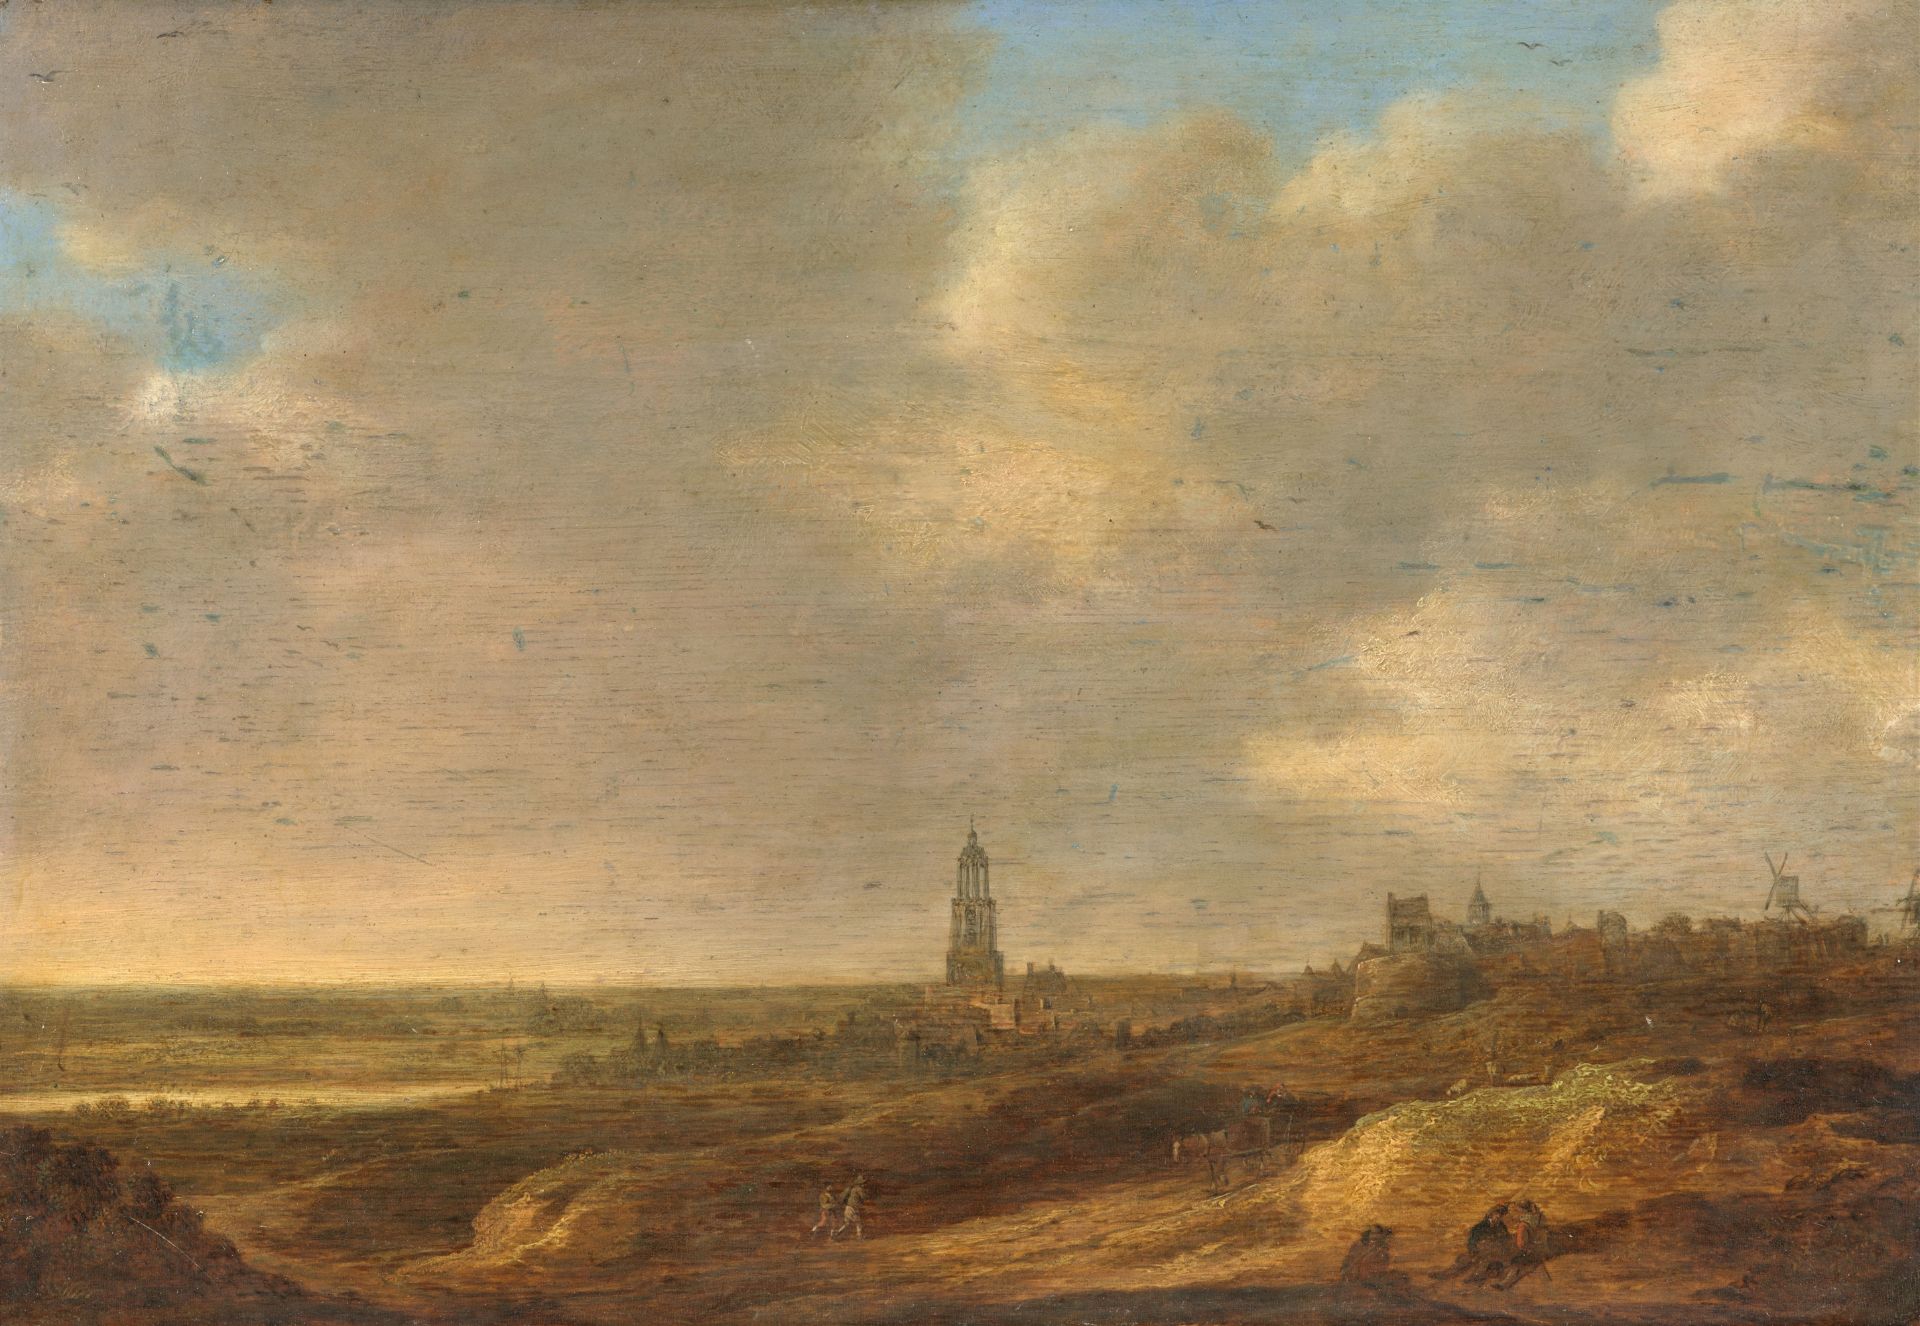 Jan van Goyen, attributed to, View of Rhenen